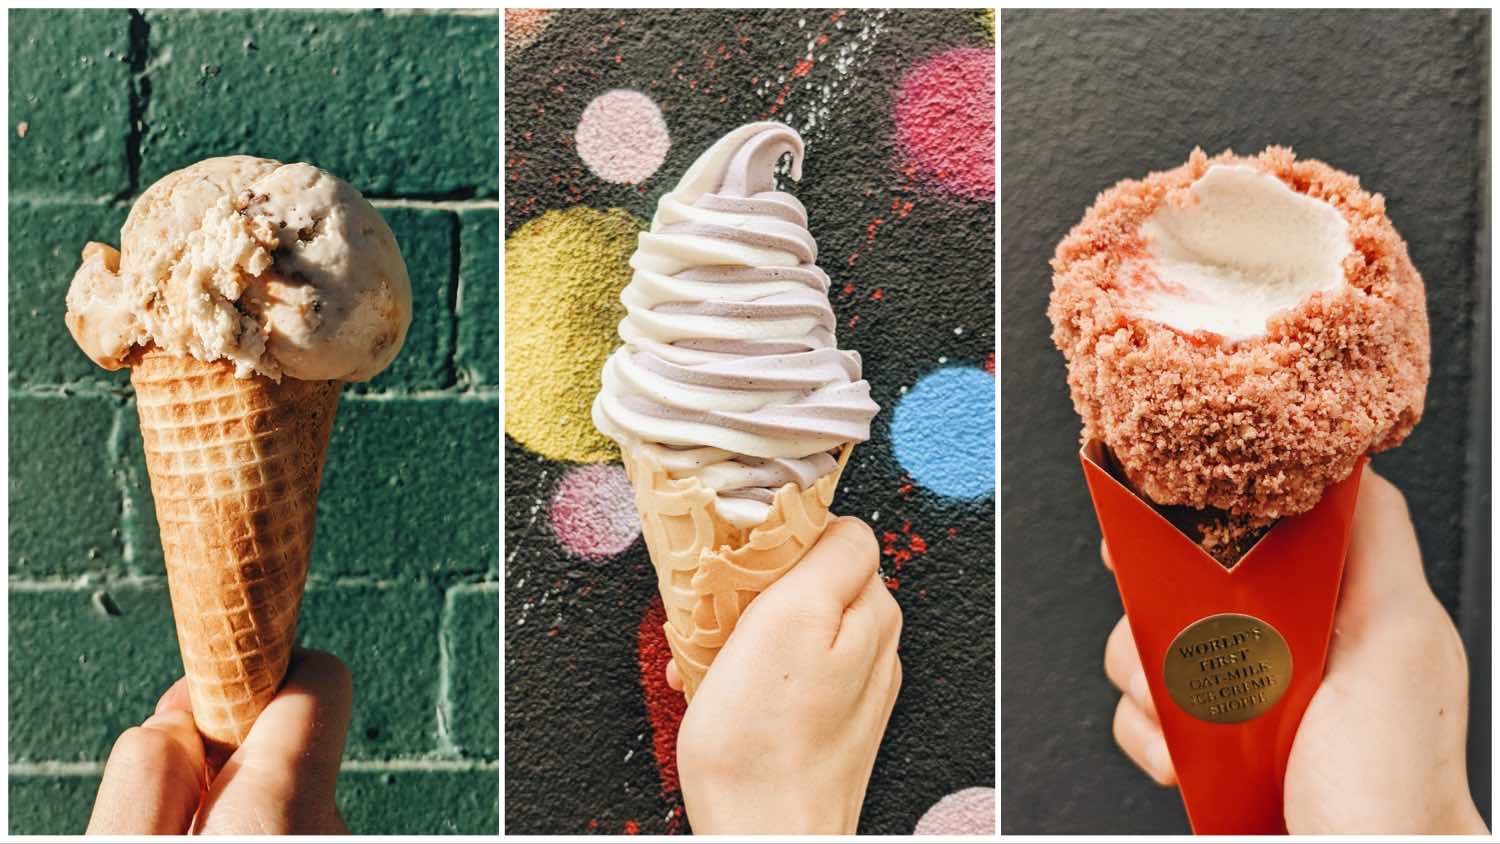 A new vegan ice cream shop in New York City